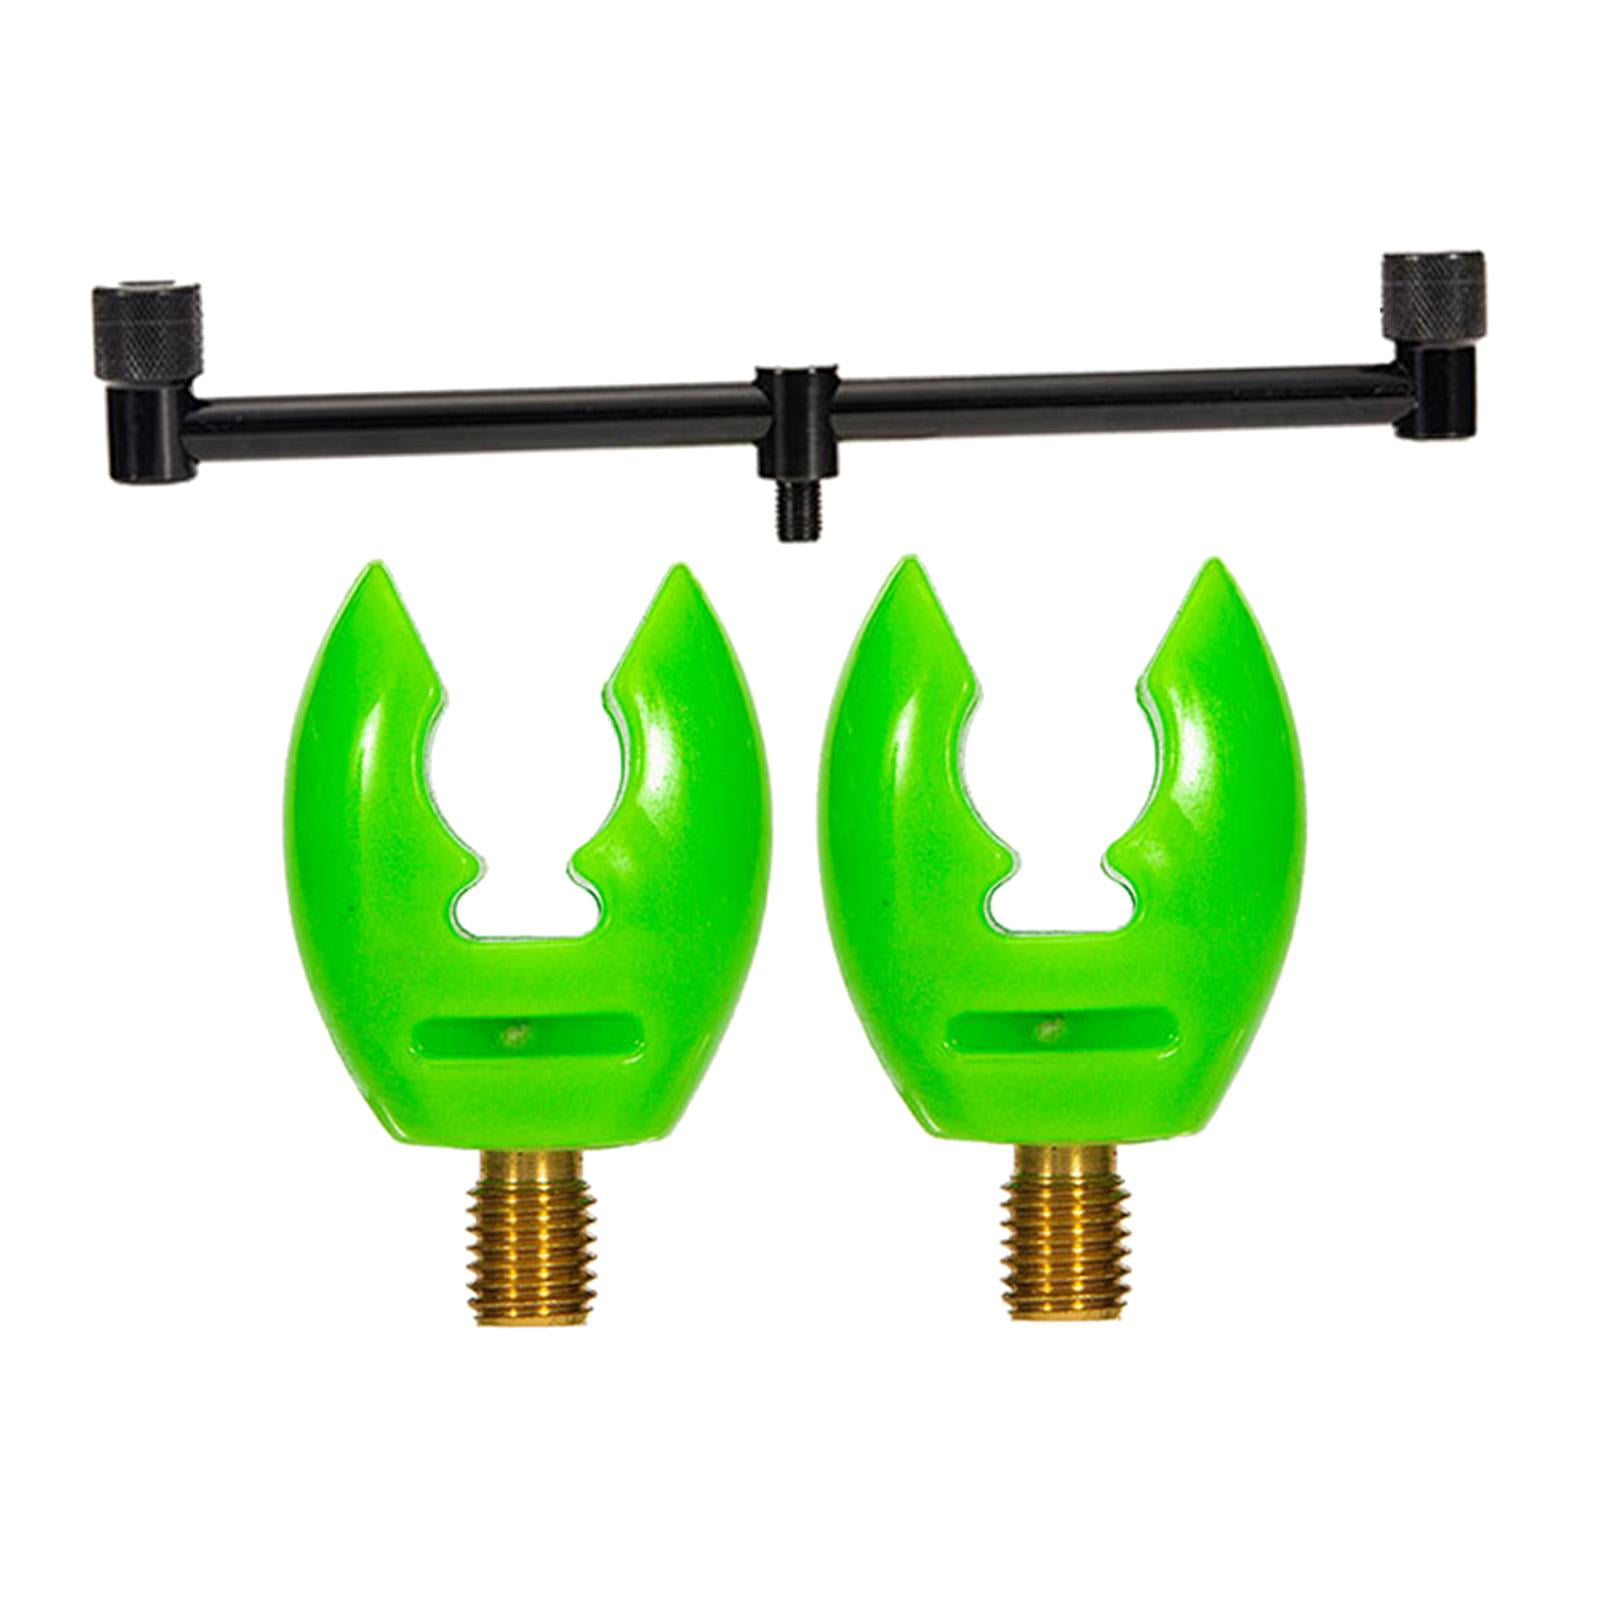 3 Green Adjustable Fishing Tackle Rod Pod Butt Rest for Bite Alarms Bank Sticks 